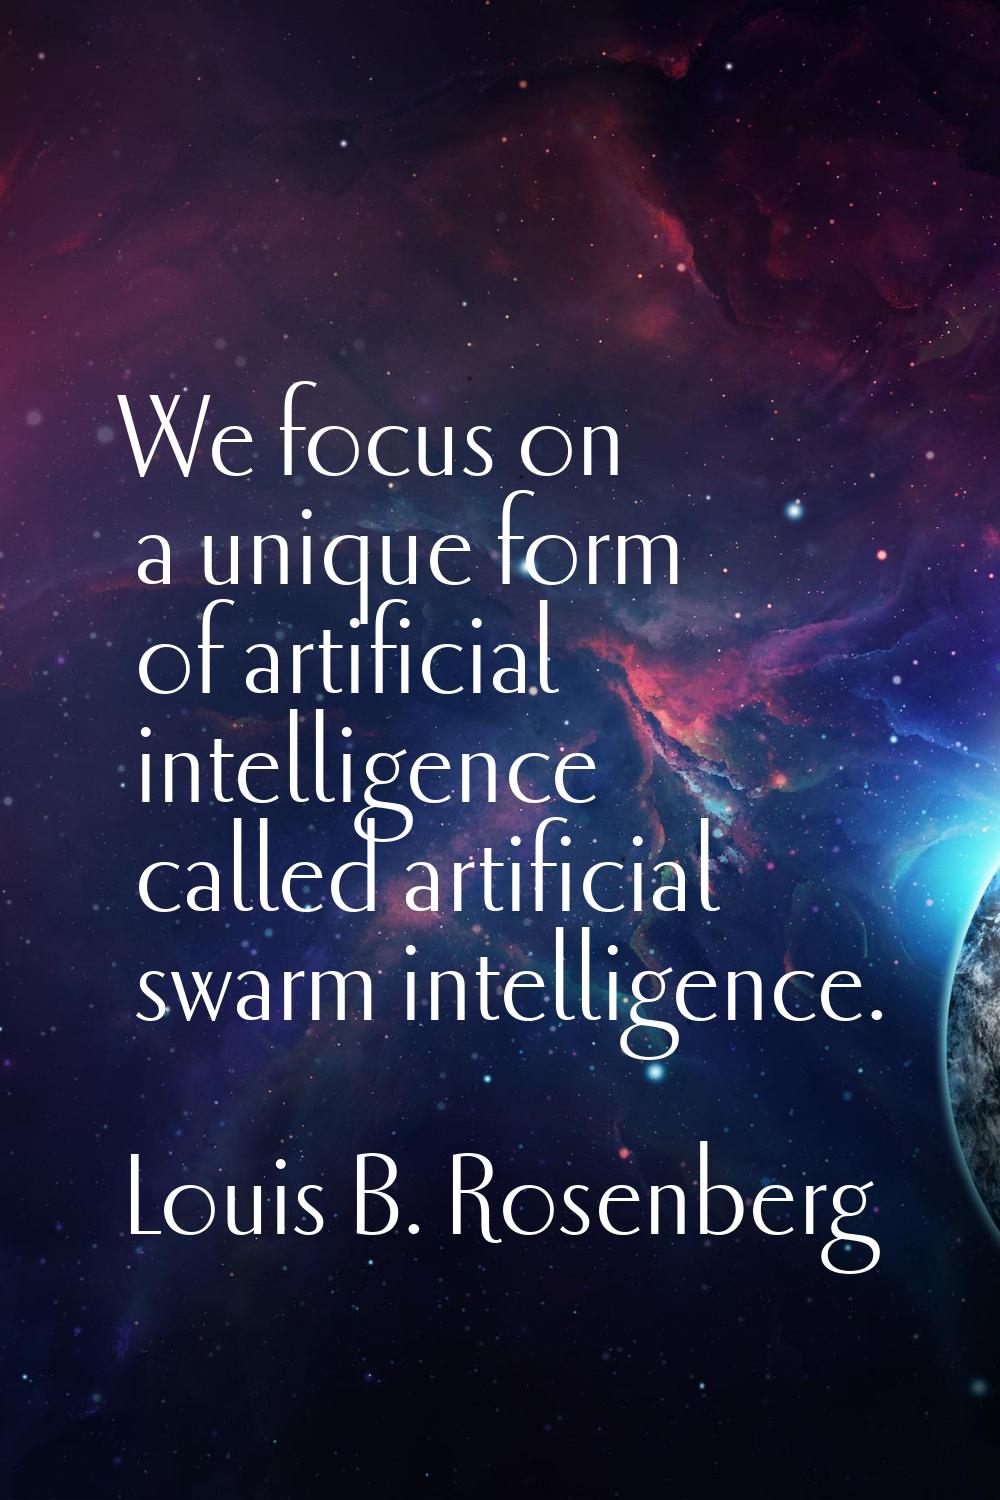 We focus on a unique form of artificial intelligence called artificial swarm intelligence.